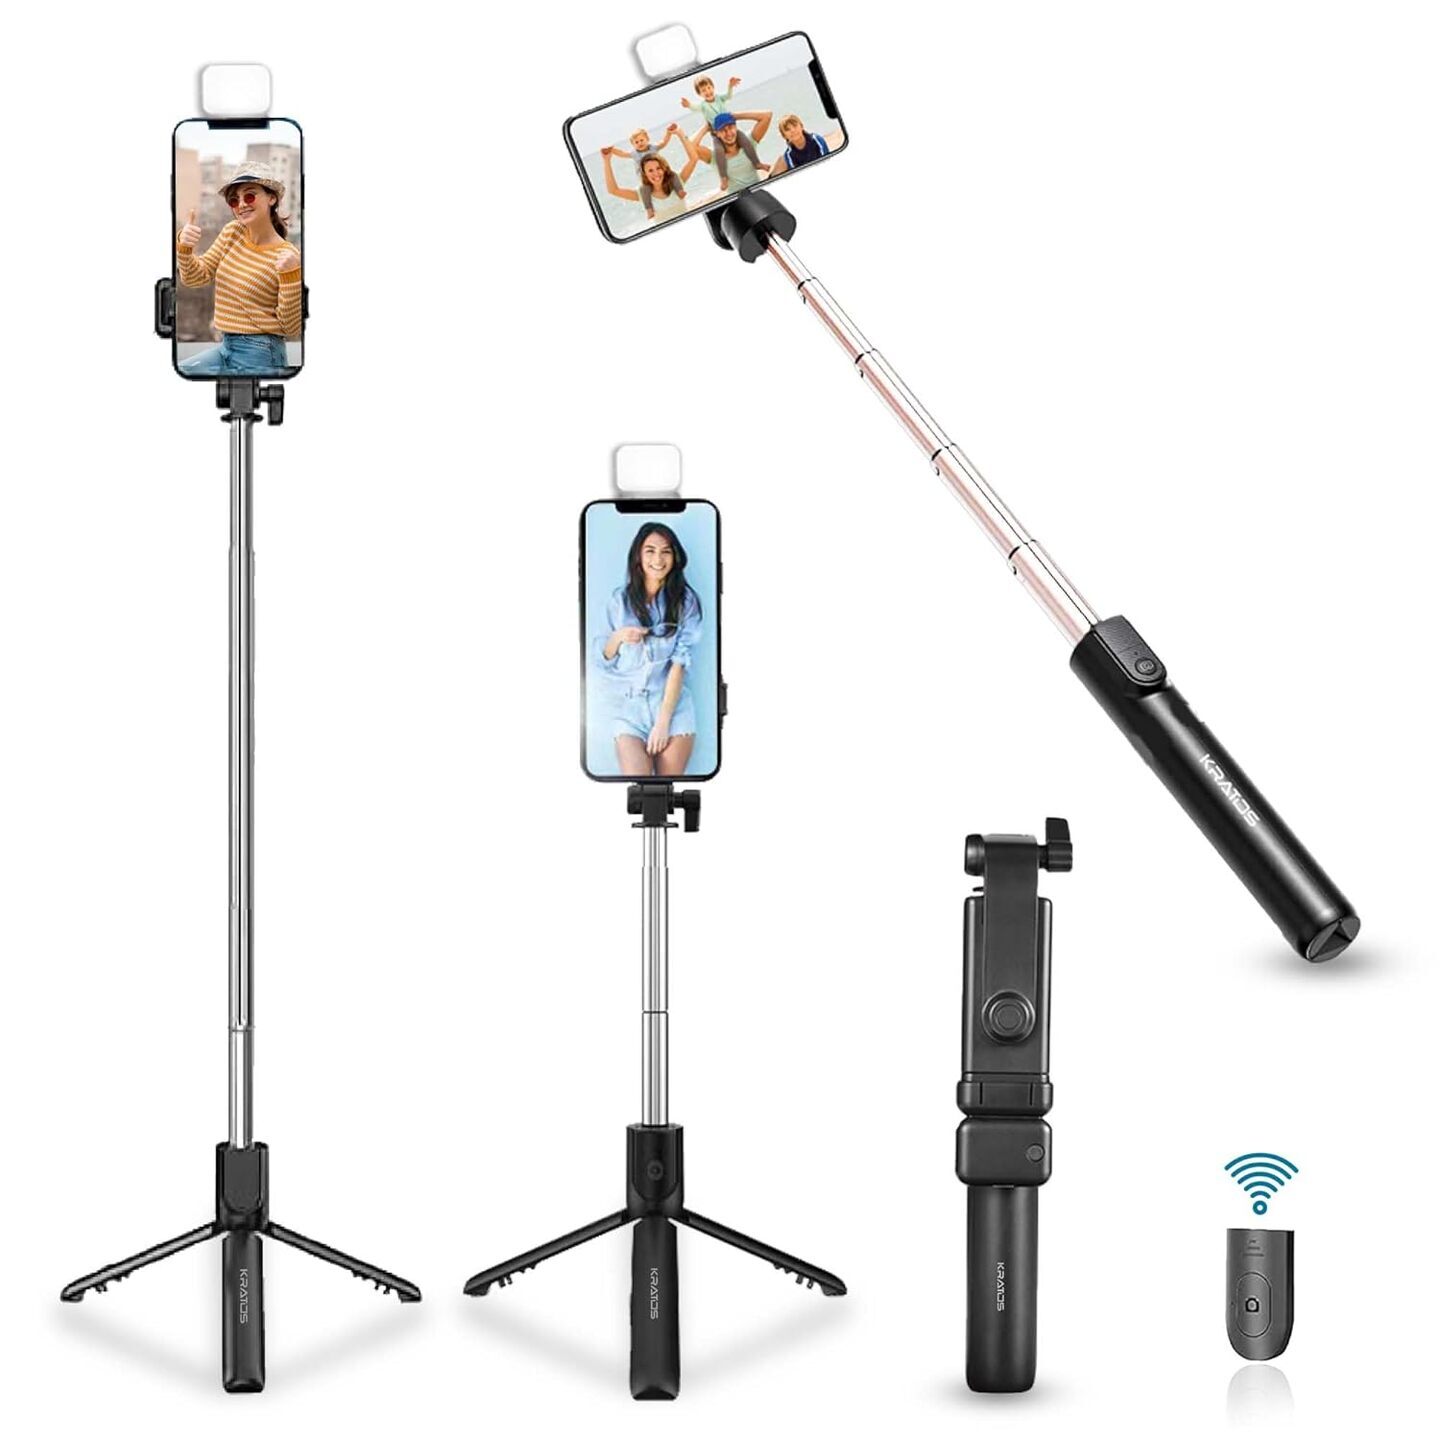 Premium Selfie stick with inbuilt rechargeable LED light, remote control and Tripod